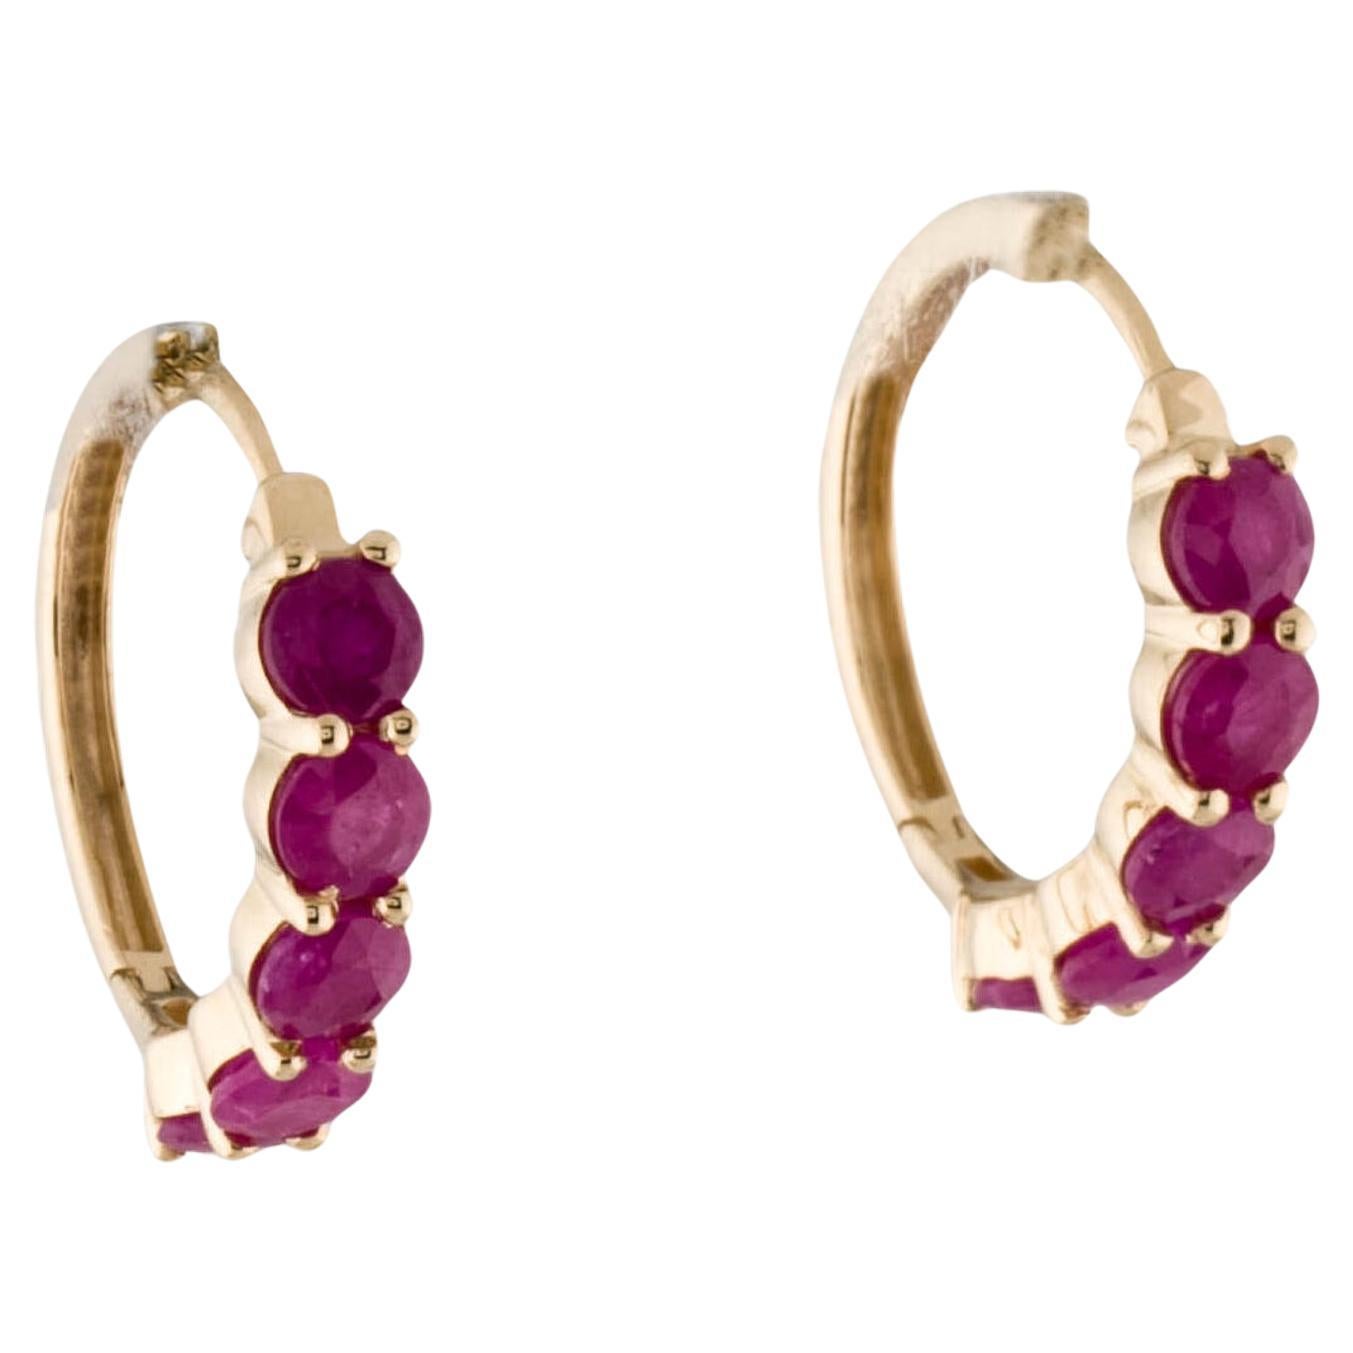 14K Ruby Hoop Earrings - 2.28ctw, Glamorous Gemstone Jewelry, Statement Style